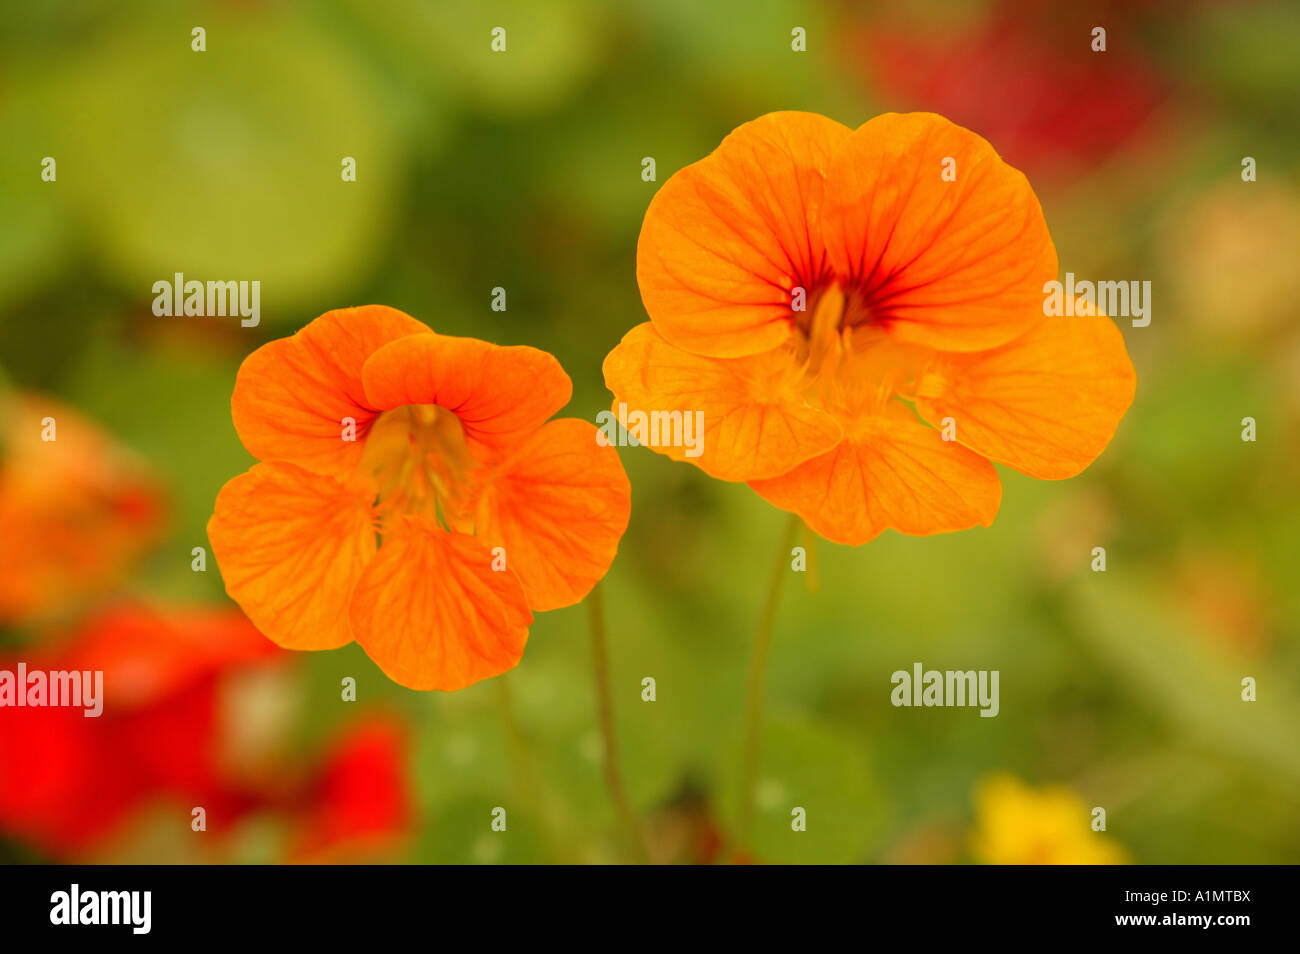 flowersnature, flowers, texture, plant, botanic, flower, yellow, orange Stock Photo